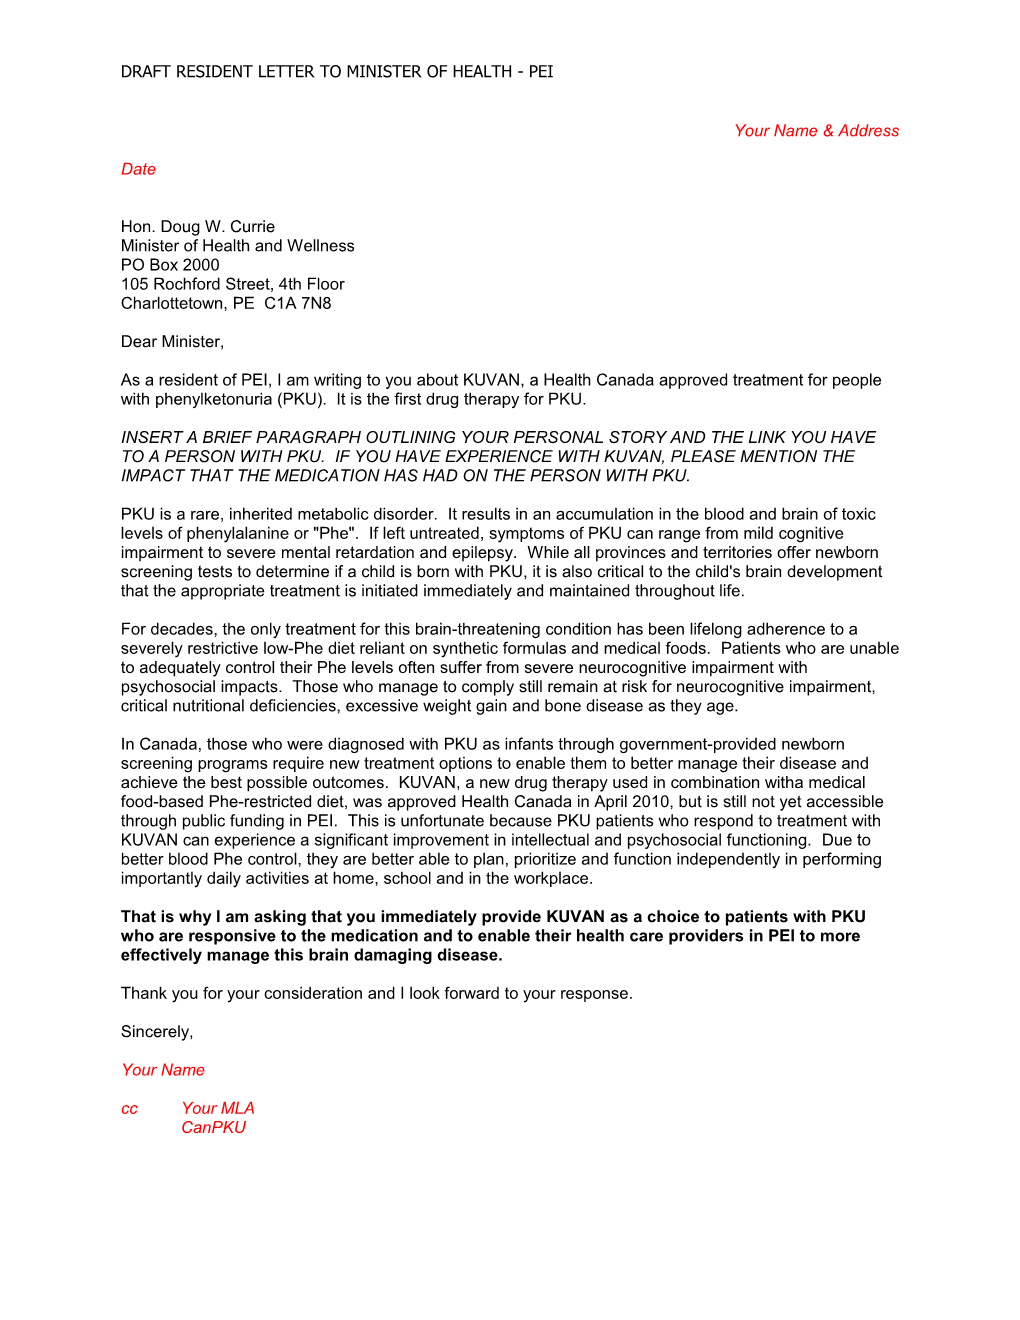 Draft Resident Letter to Minister of Health - Pei